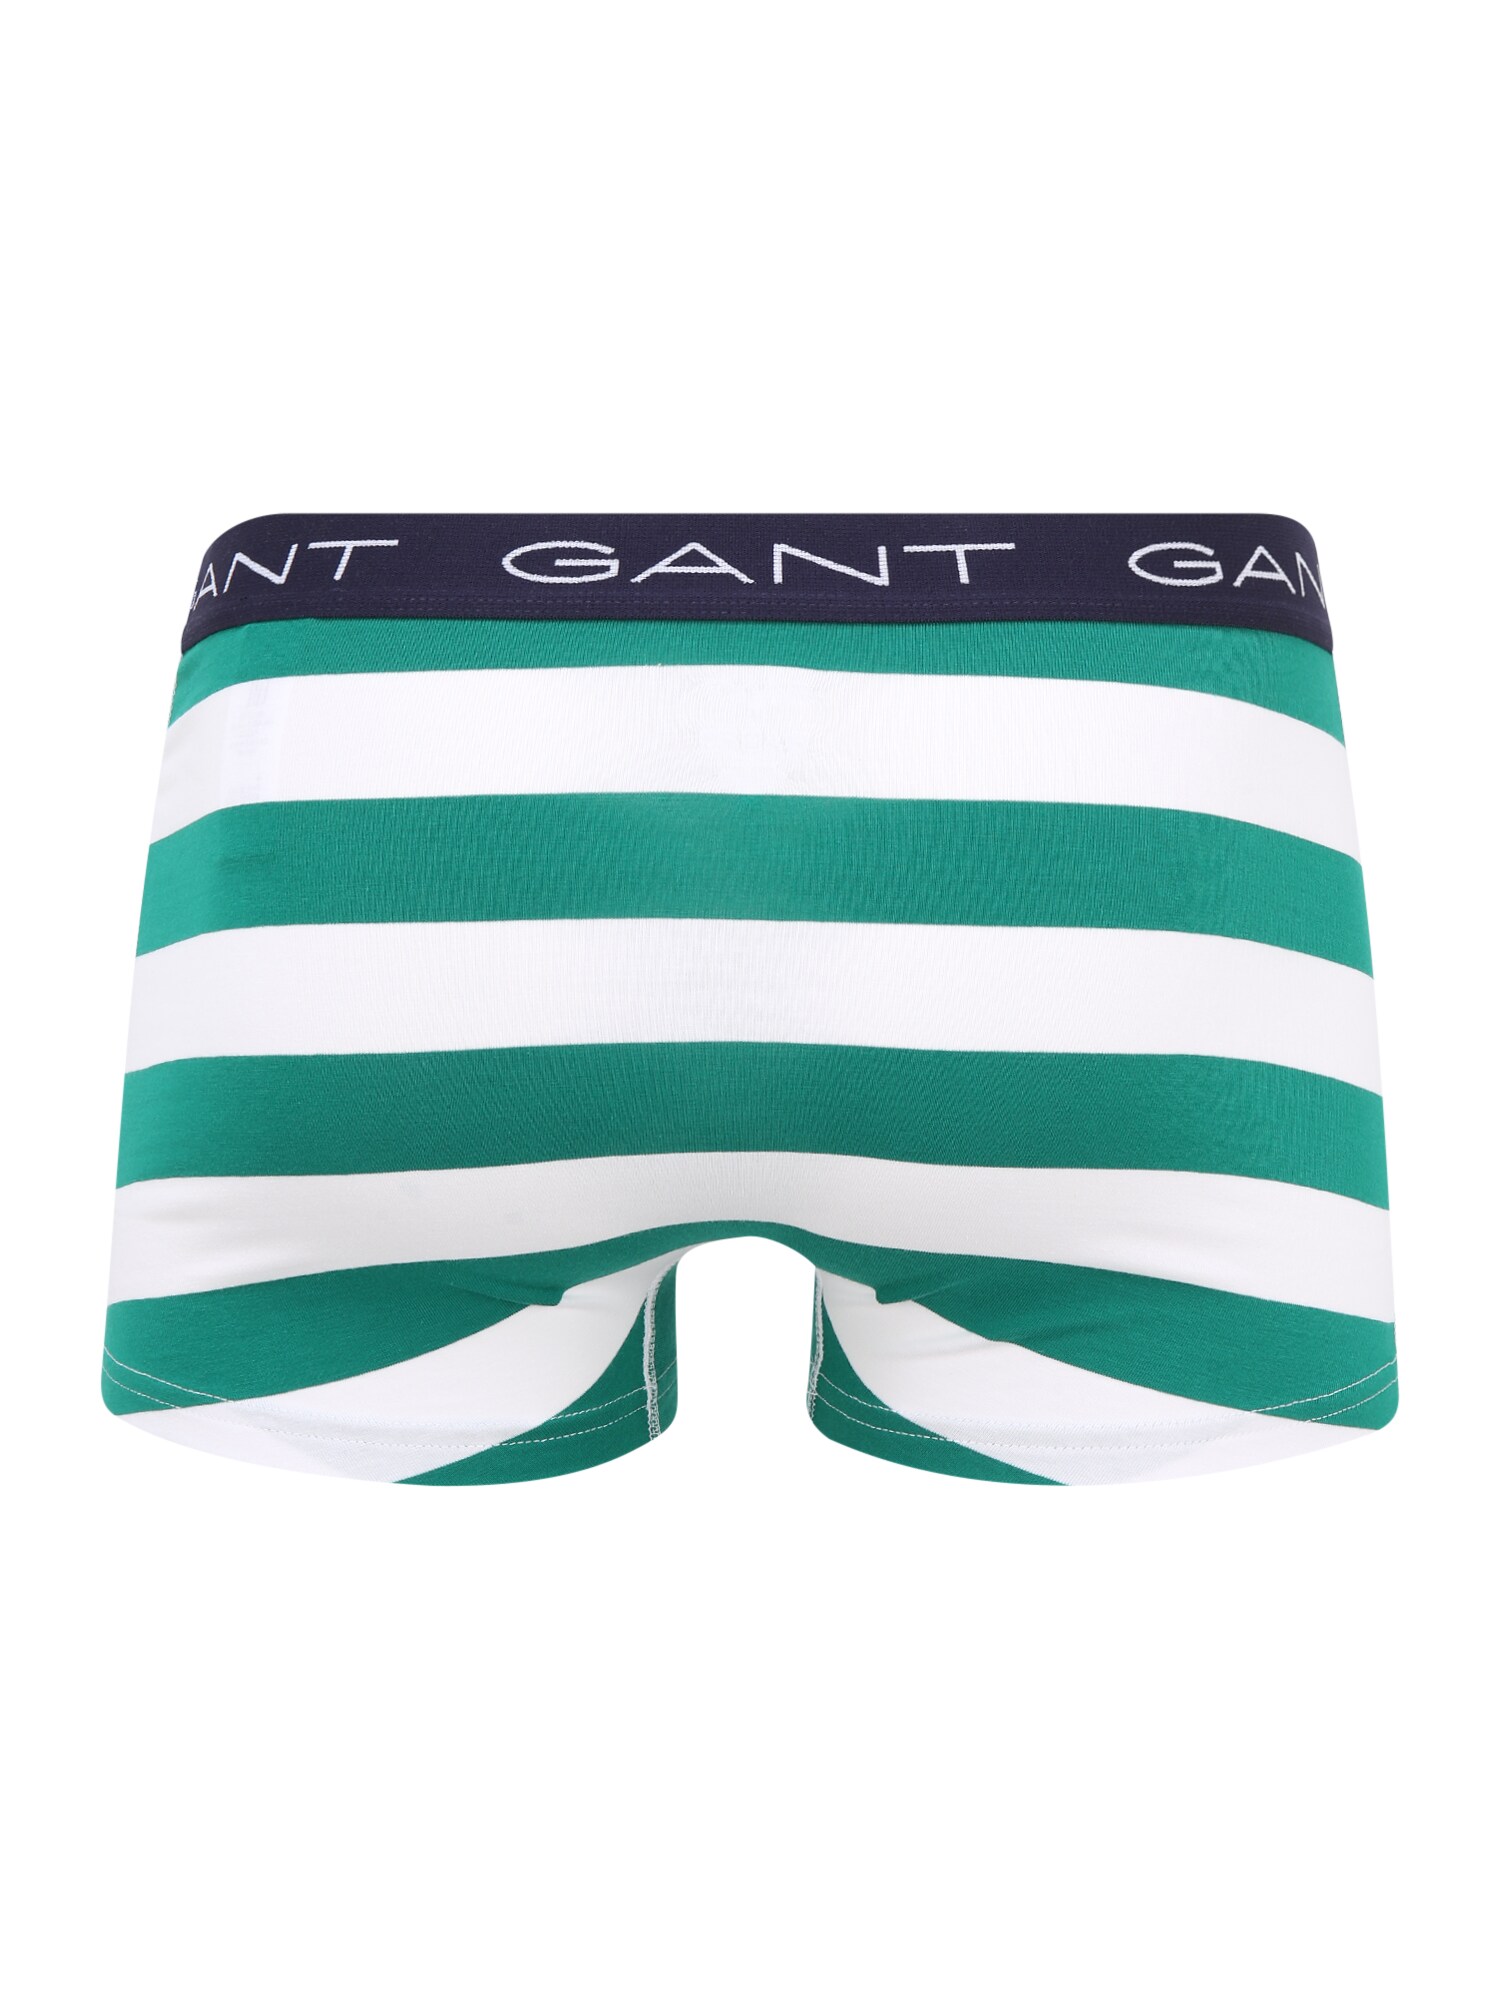 GANT Boxer shorts 'RUGBY'  green / white / navy